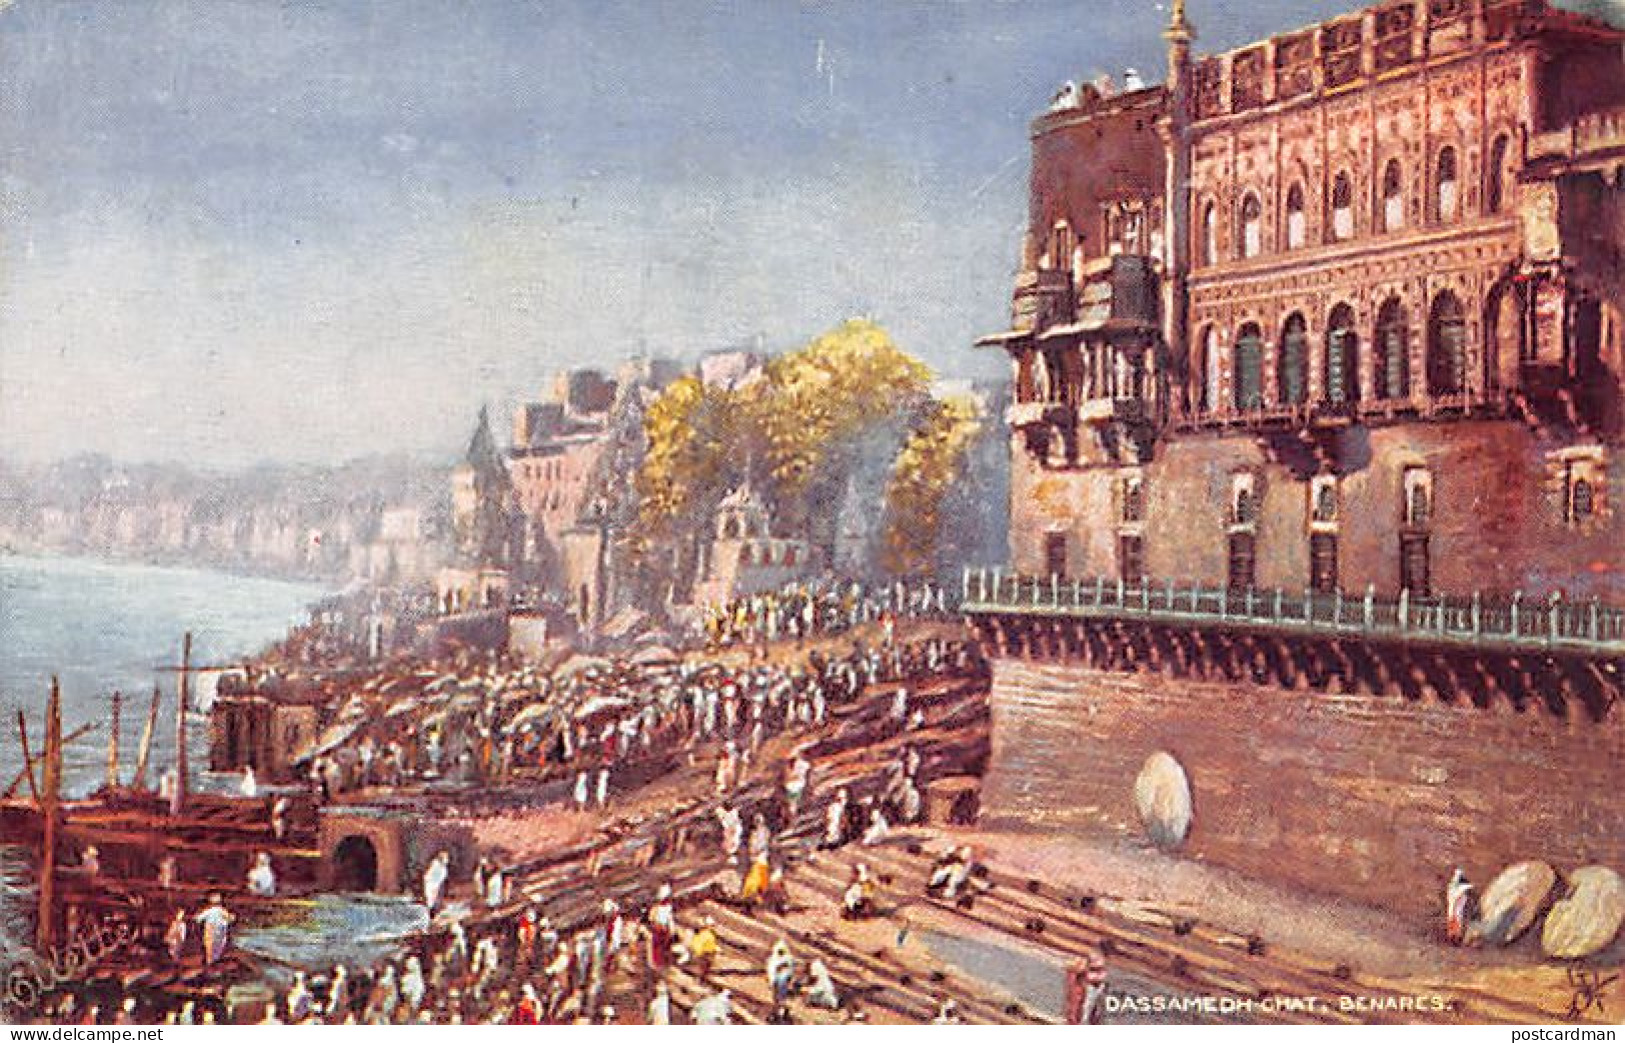 India - VARANASI Benares - Dassamedh Ghat - Publ. Raphael Tuck & Sons - India